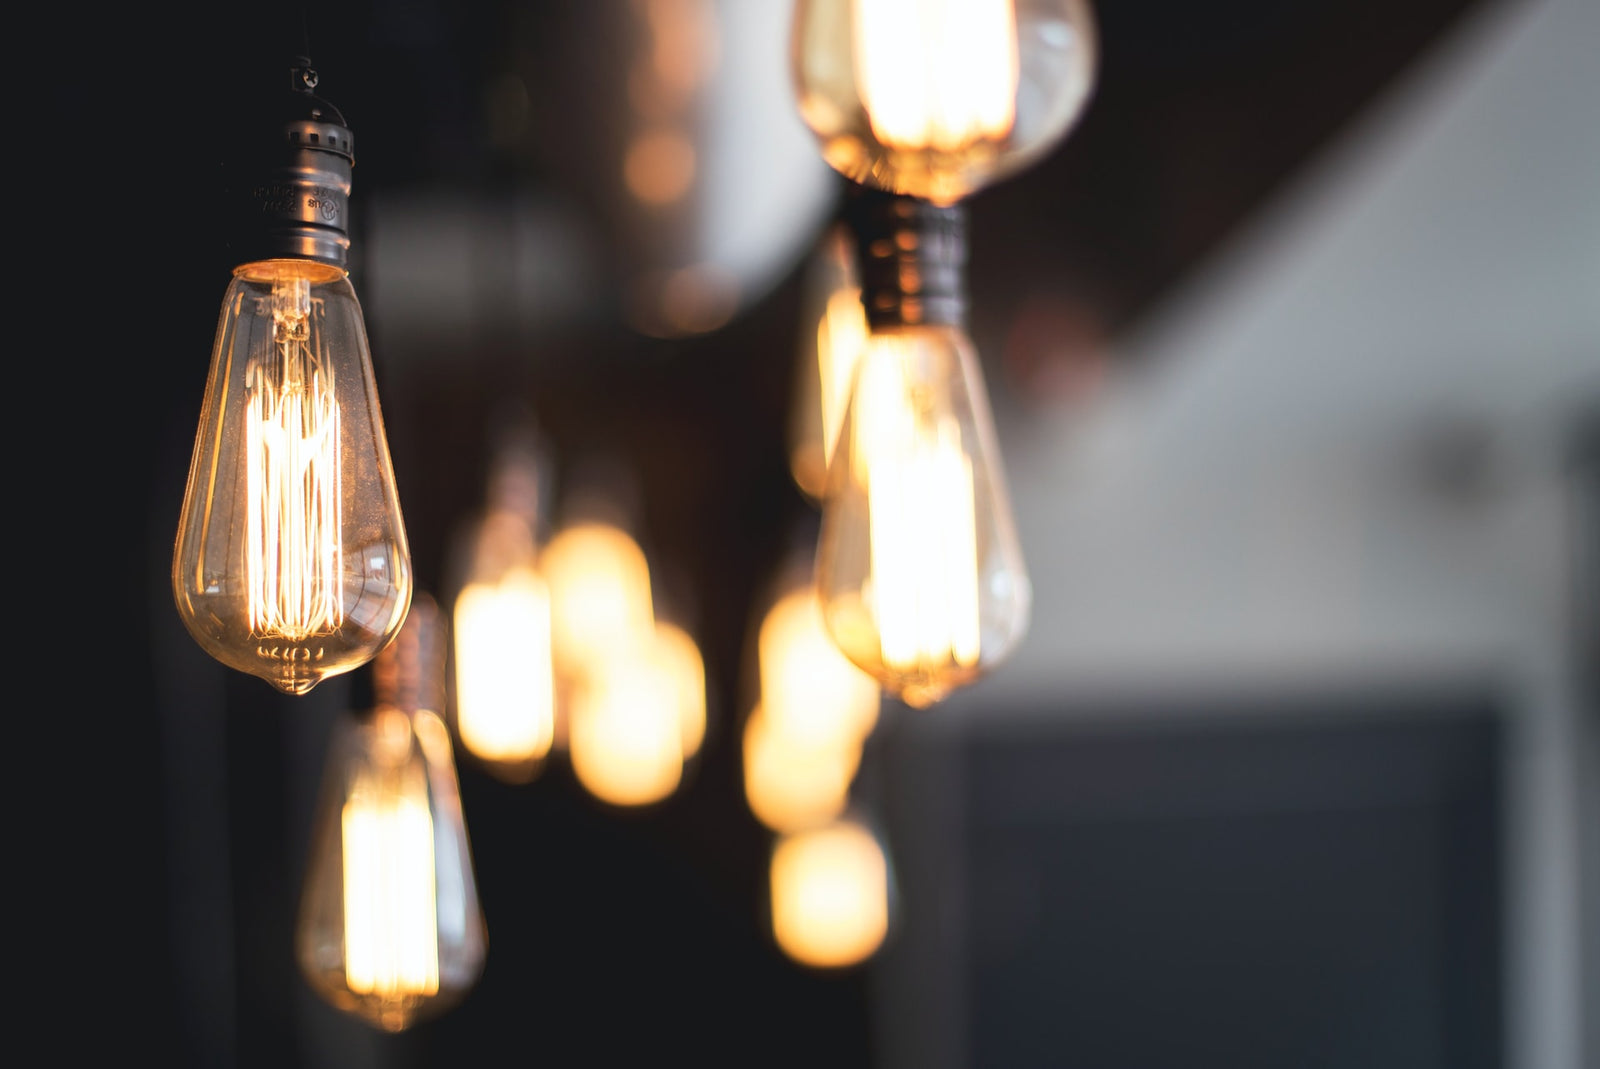 4 Myths about LED Bulbs Debunked